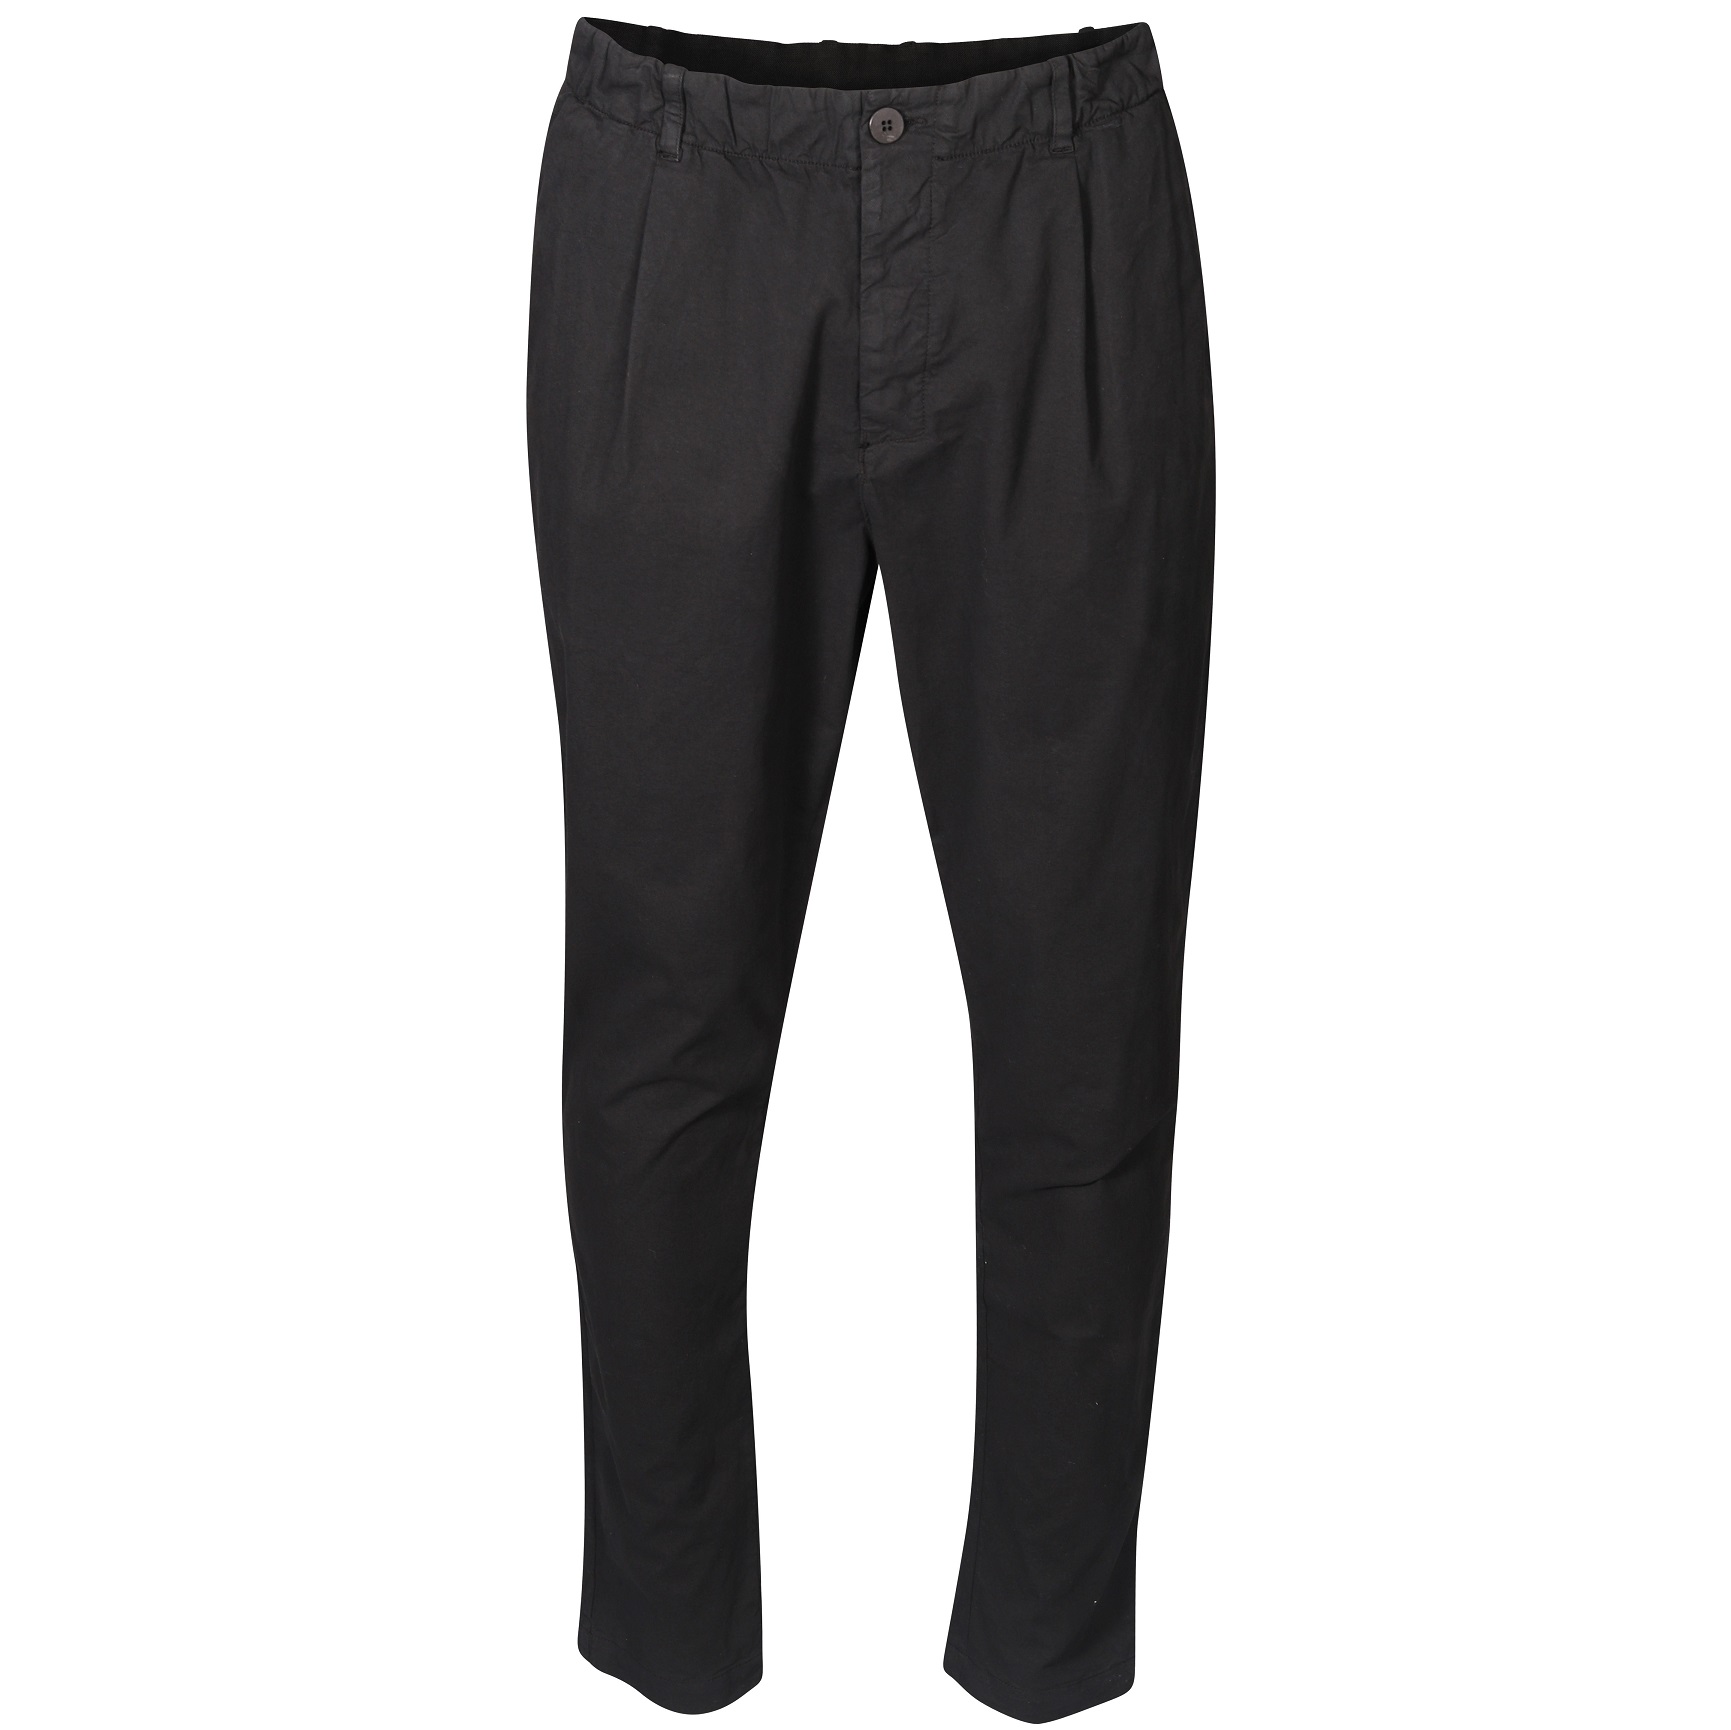 TRANSIT UOMO Light Cotton Stretch Trouser in Black S